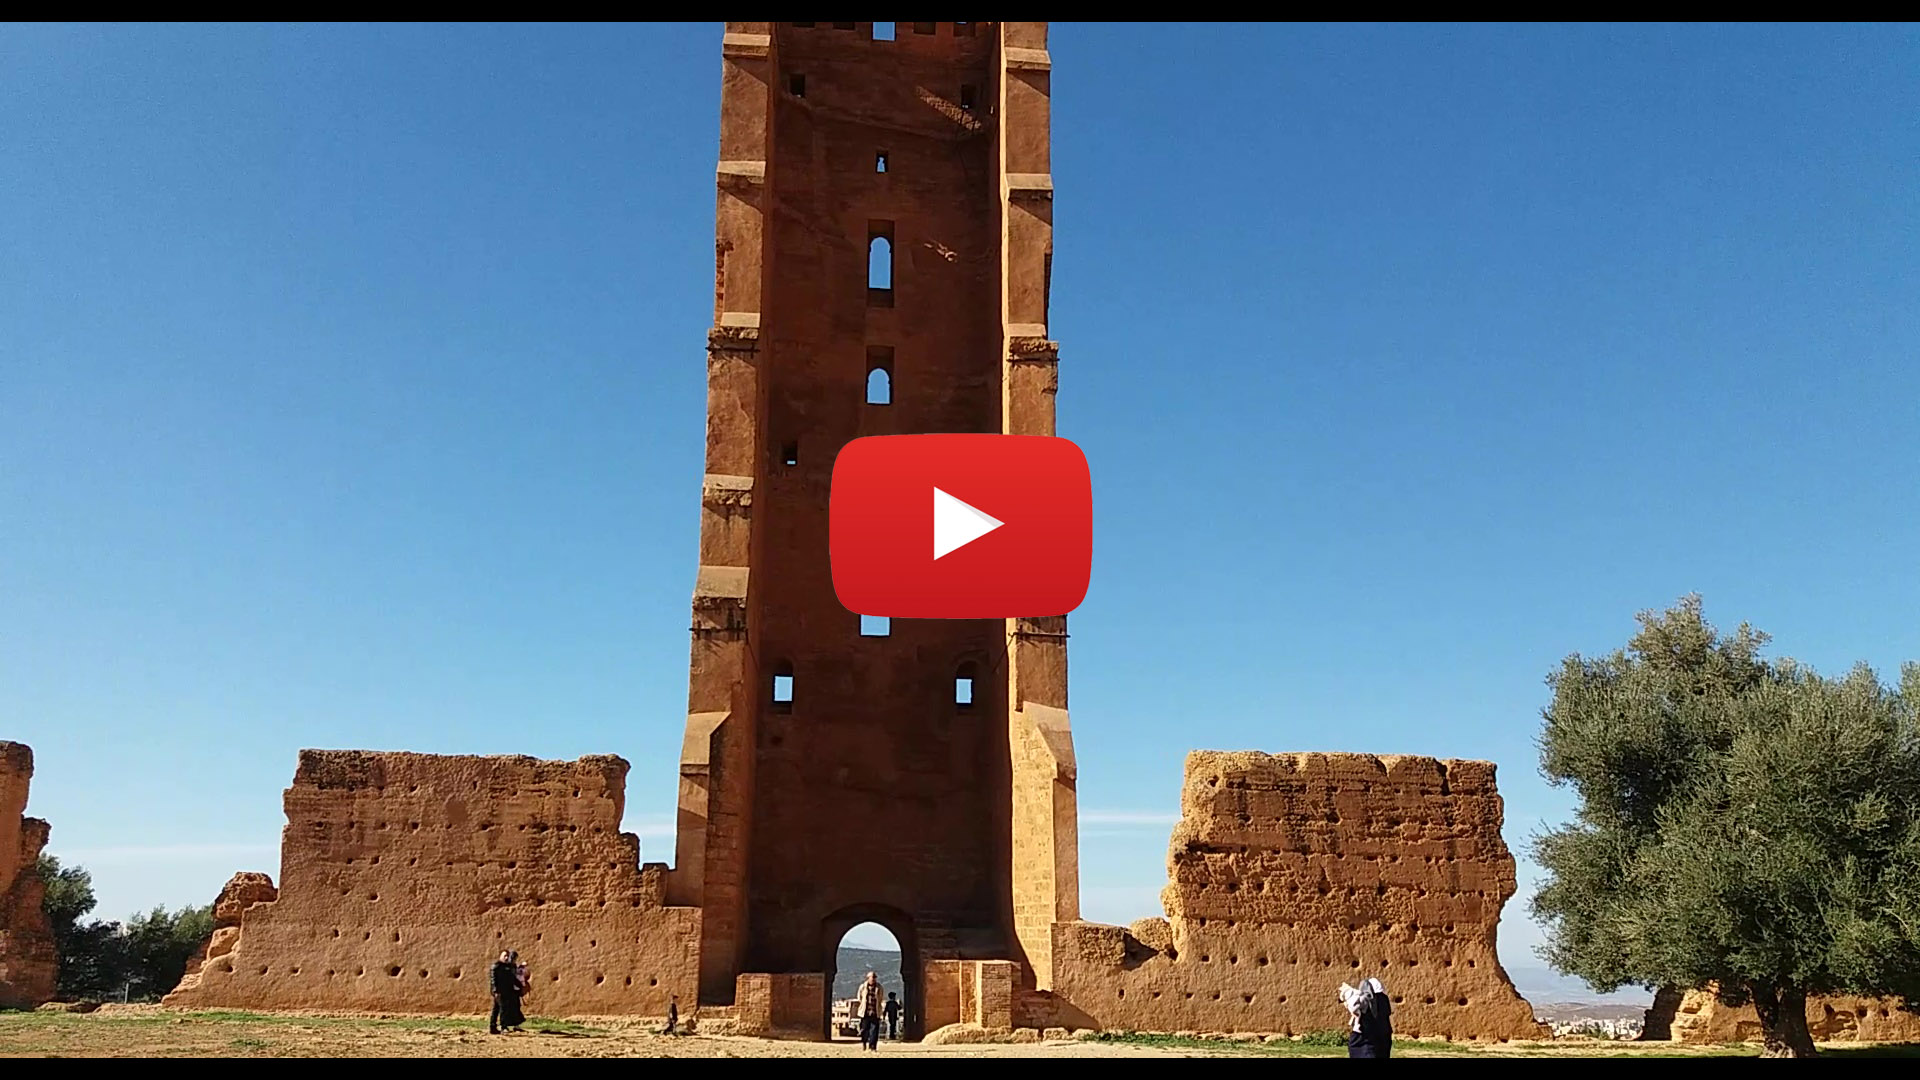 The Great Mosque of Mansura in Tlemcen